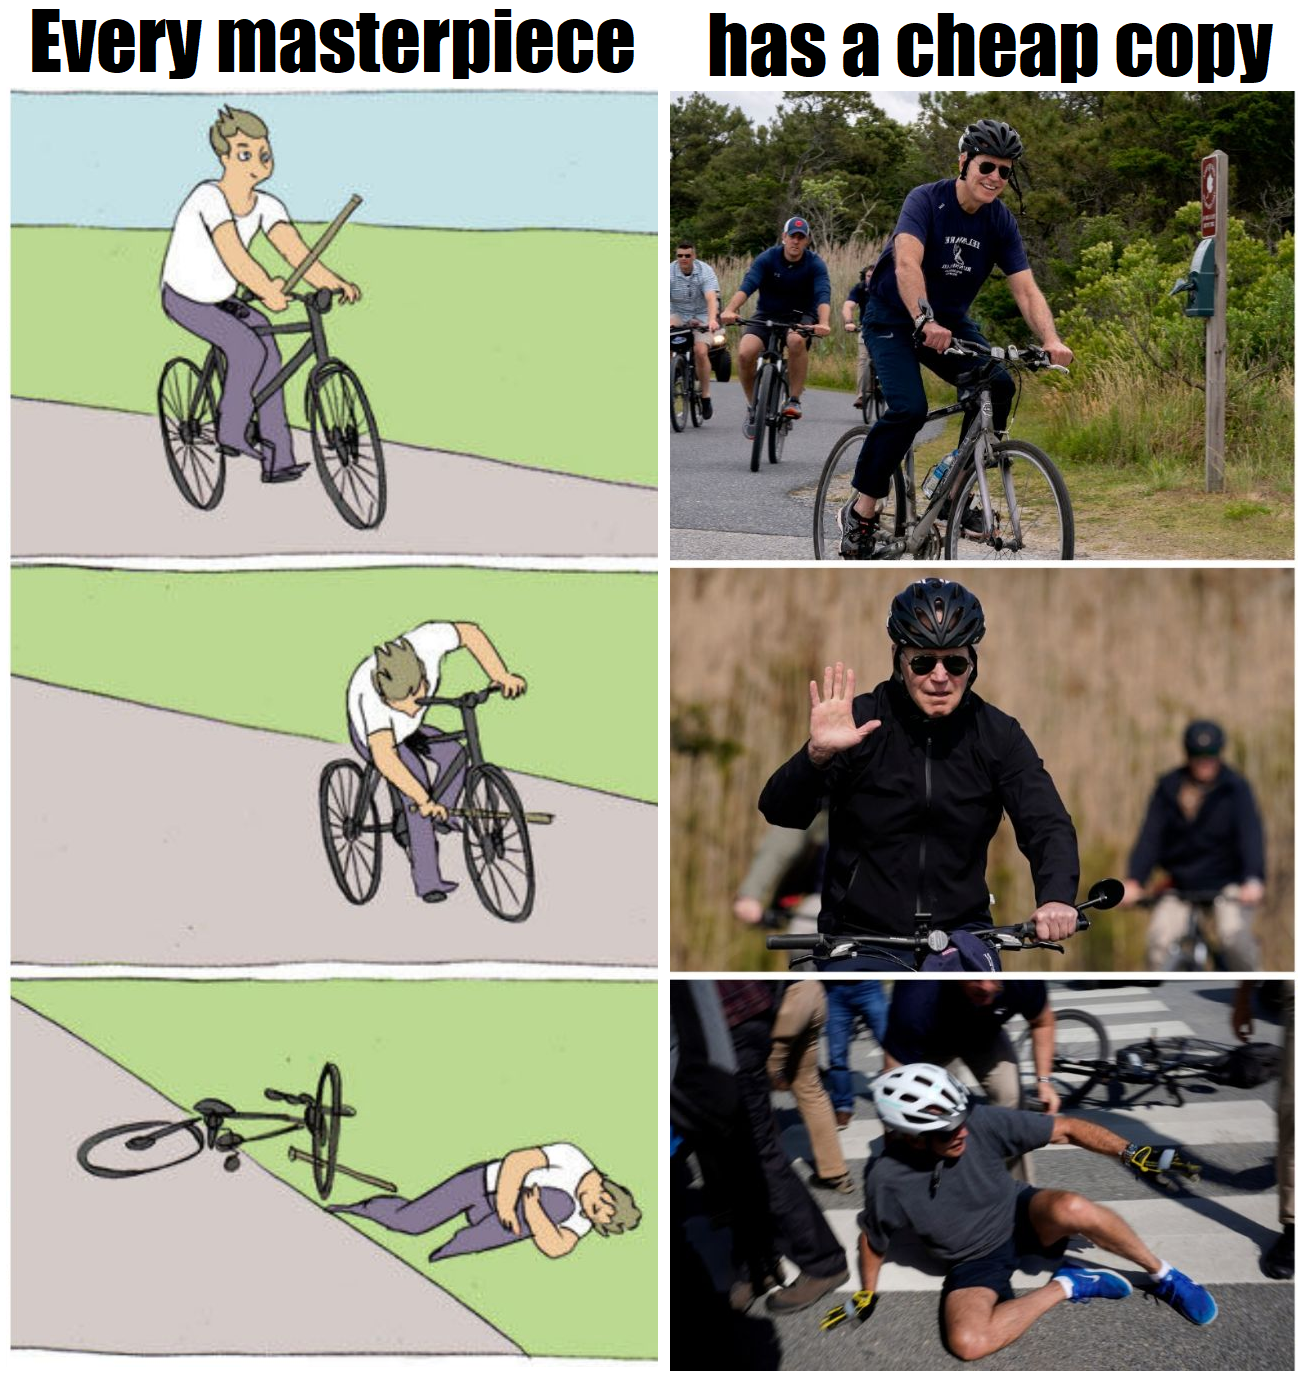 funny memes - run as admin meme - Every masterpiece has a cheap copy Jh